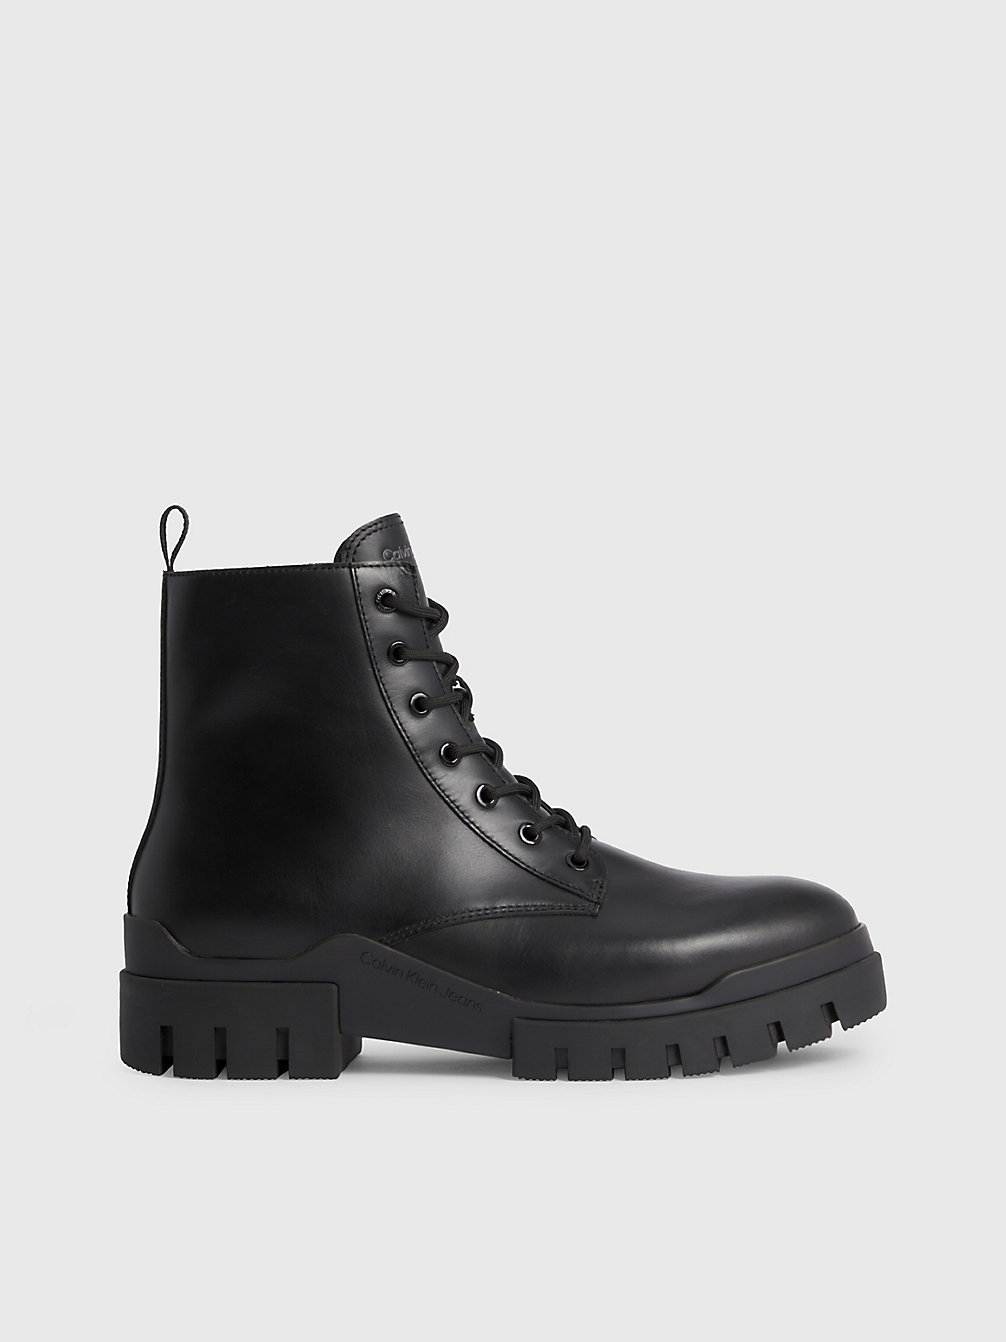 TRIPLE BLACK Leather Boots undefined men Calvin Klein